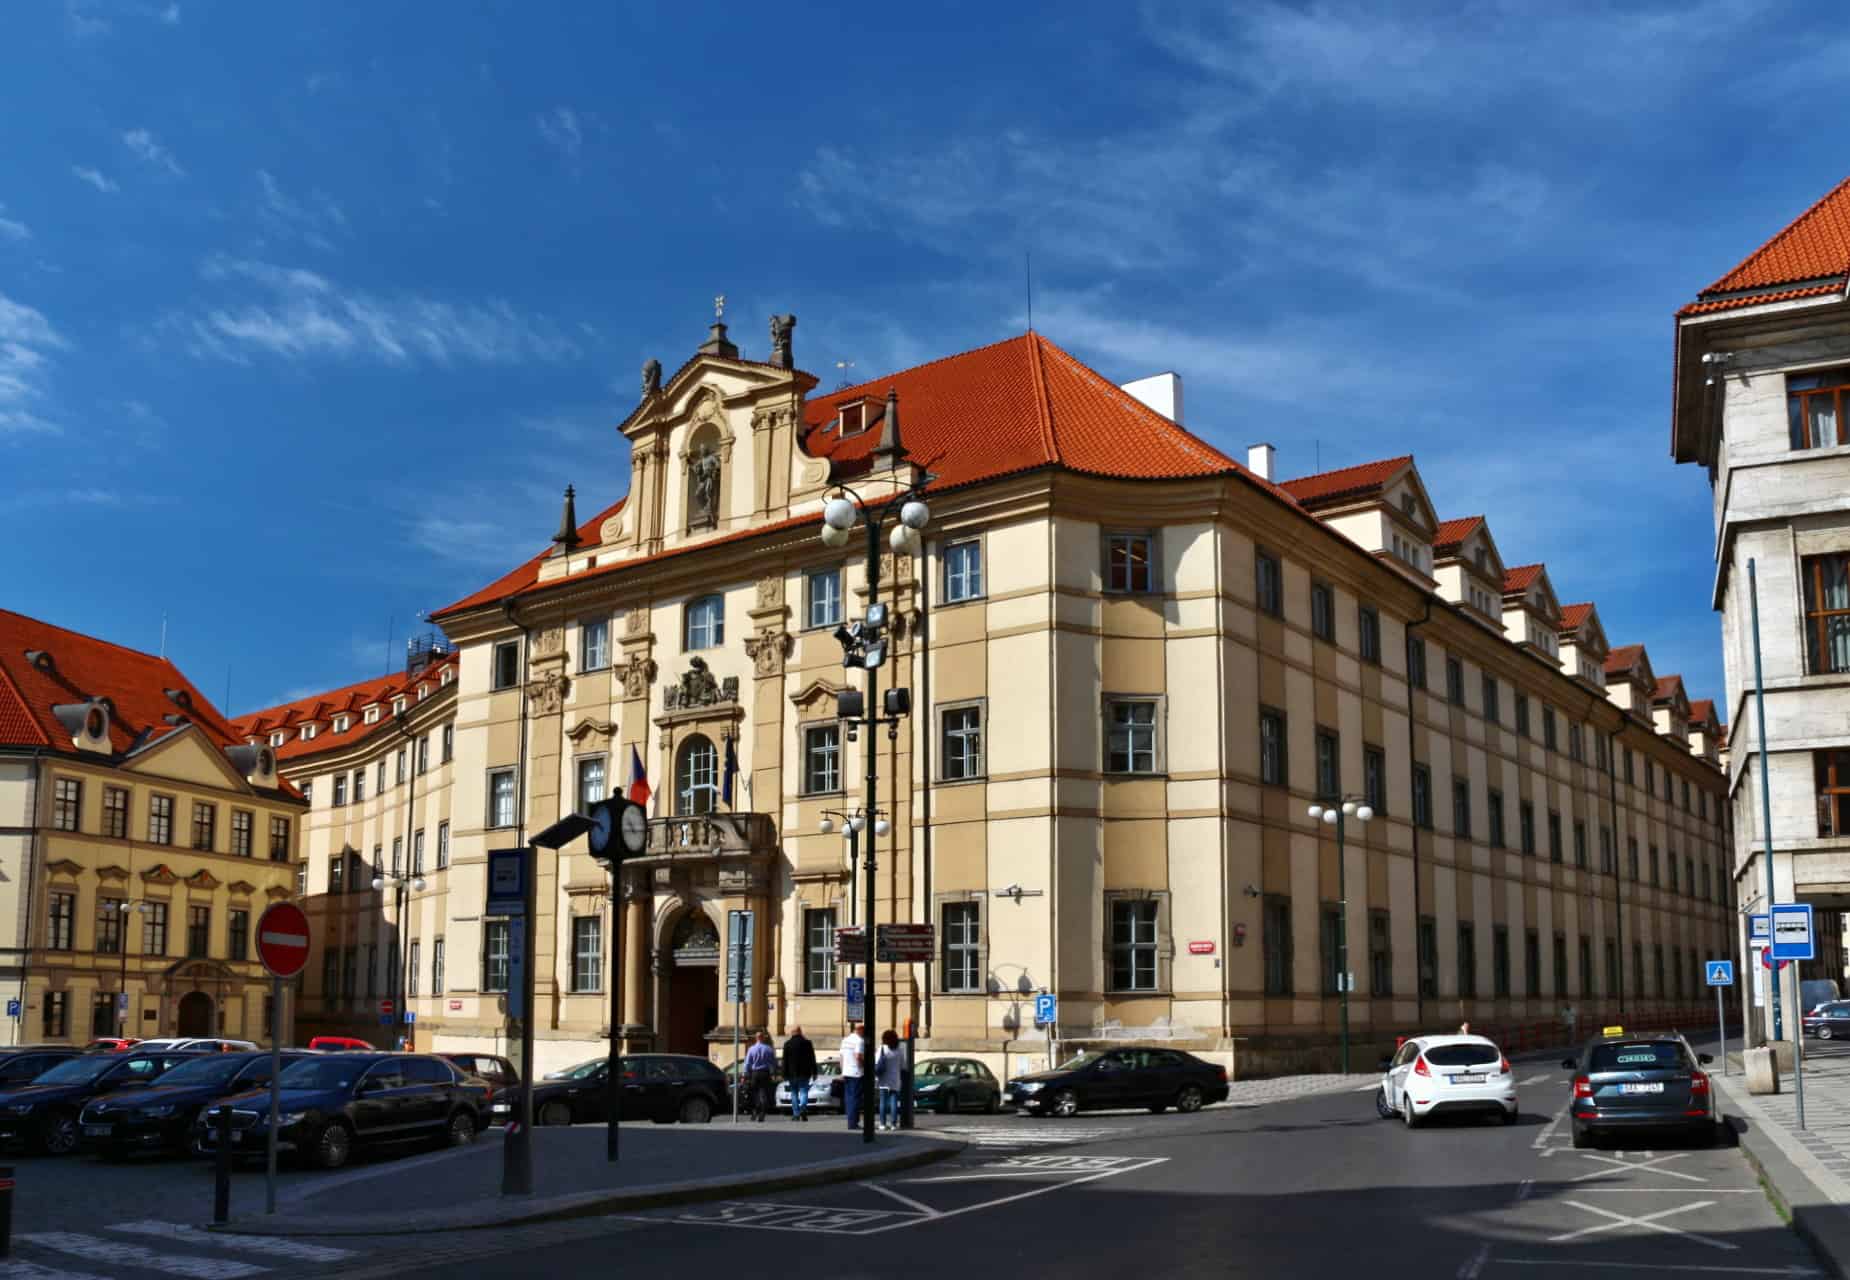 National library of Czech Republic